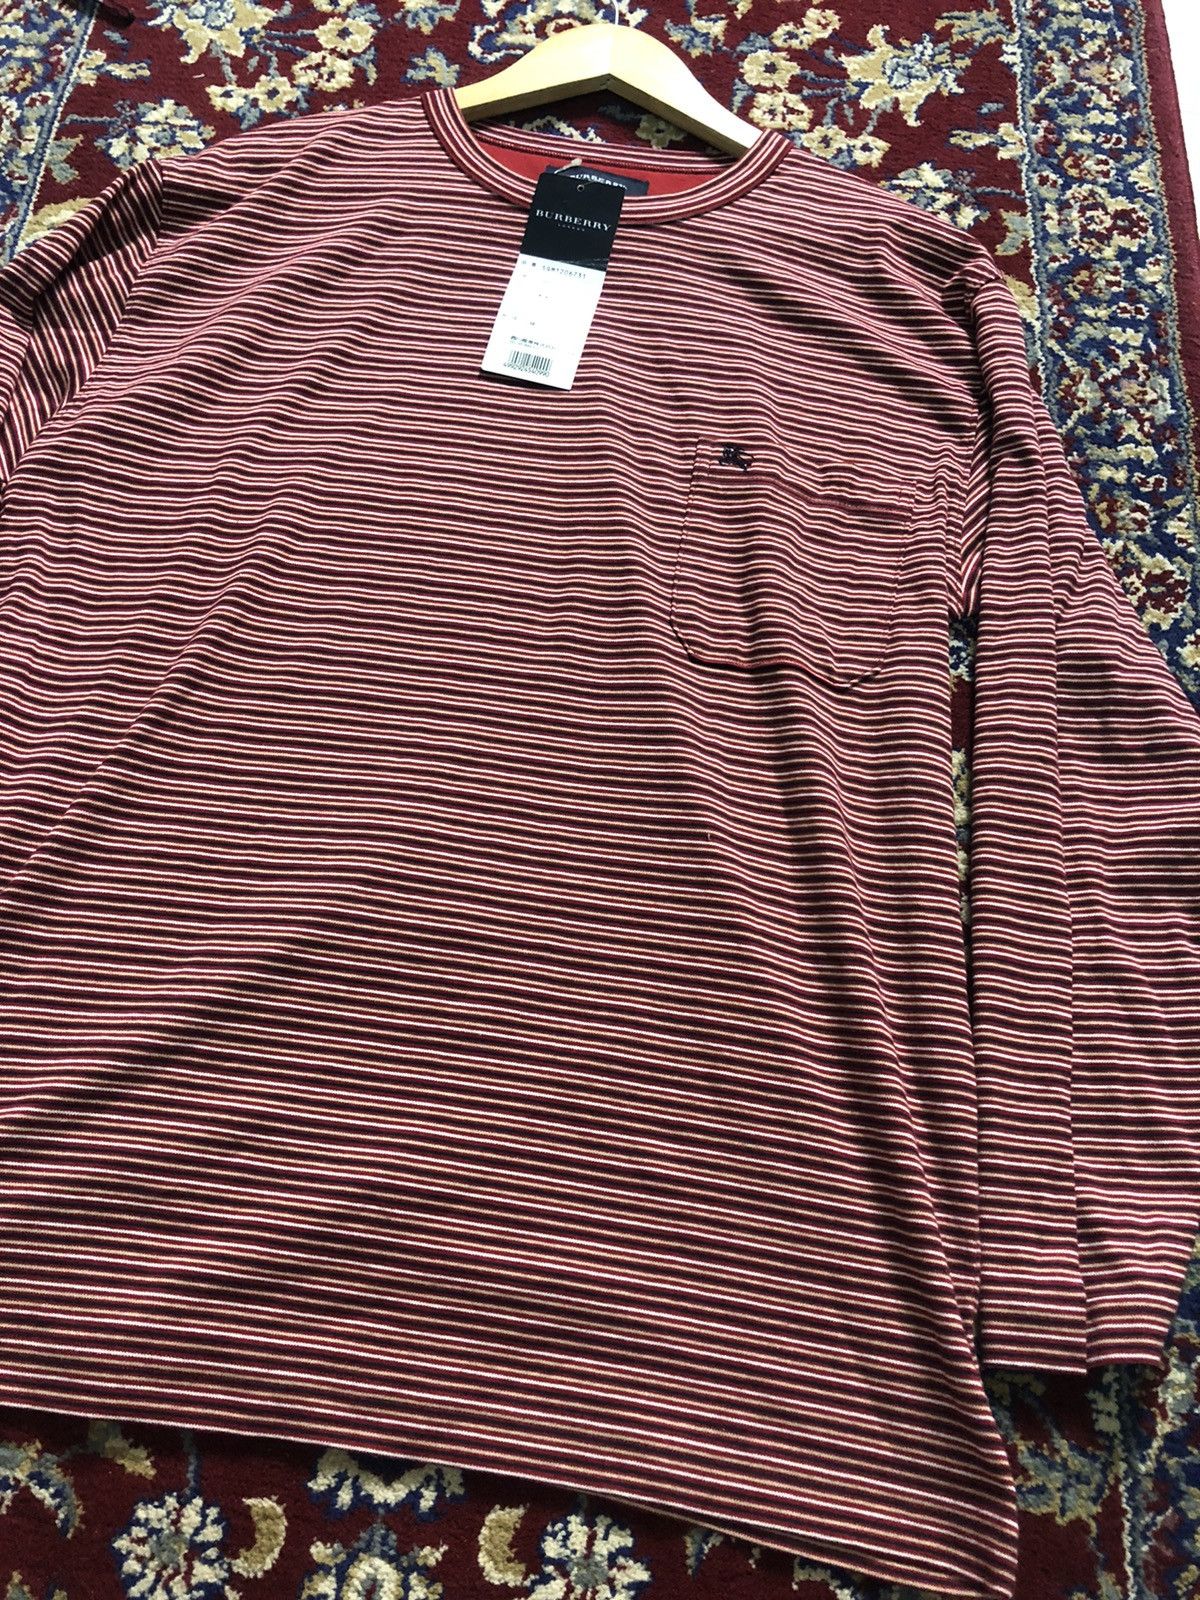 Burberry London Stripes Pocket Tee Long Sleeve Shirt - 3